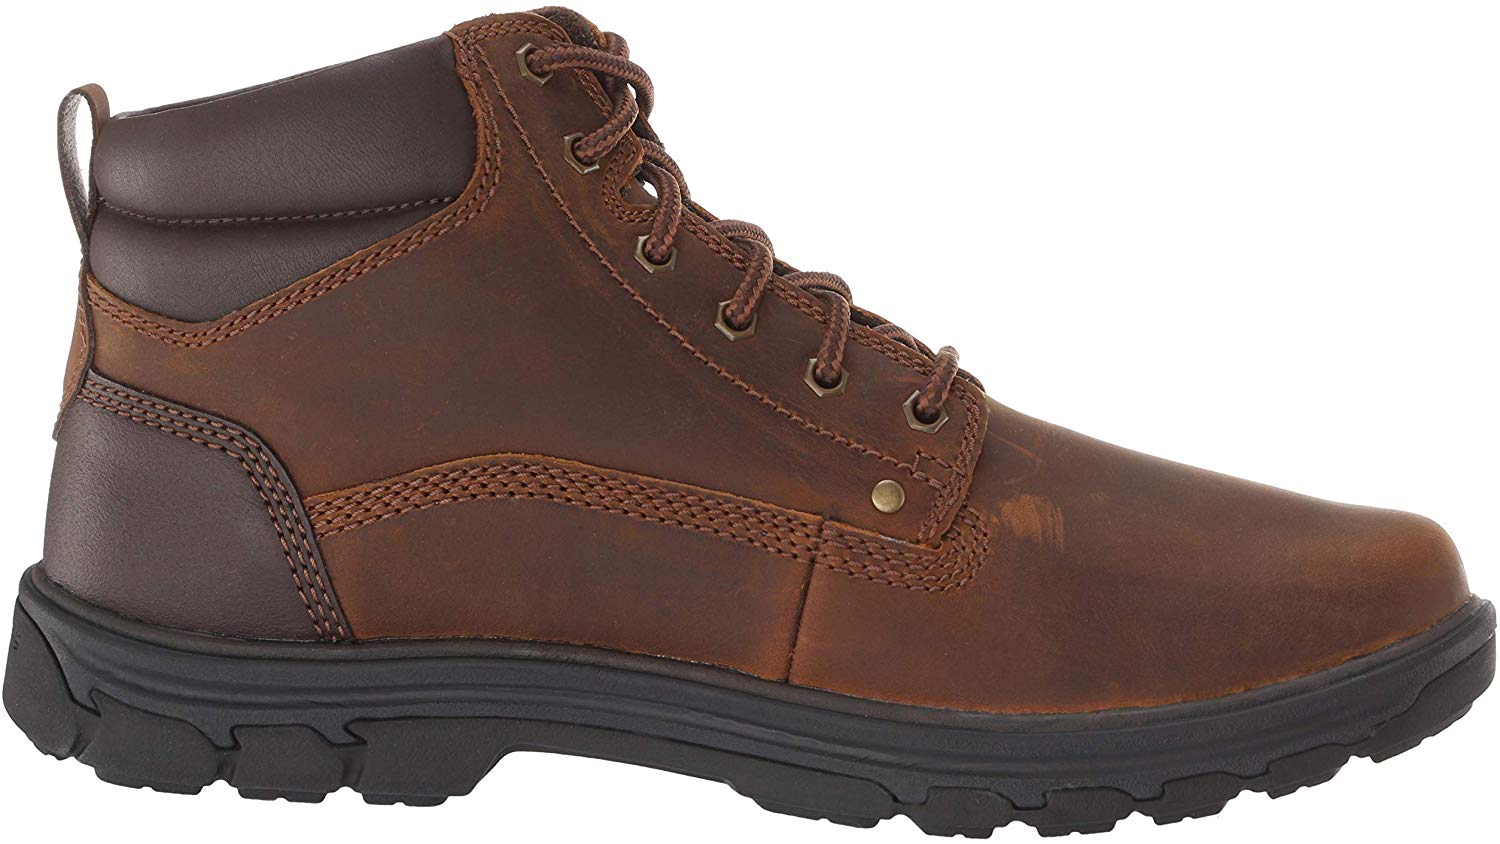 Skechers Men's Segment-Garnet Hiking Boot, Cdb, Size 14.0 Zwkw | eBay